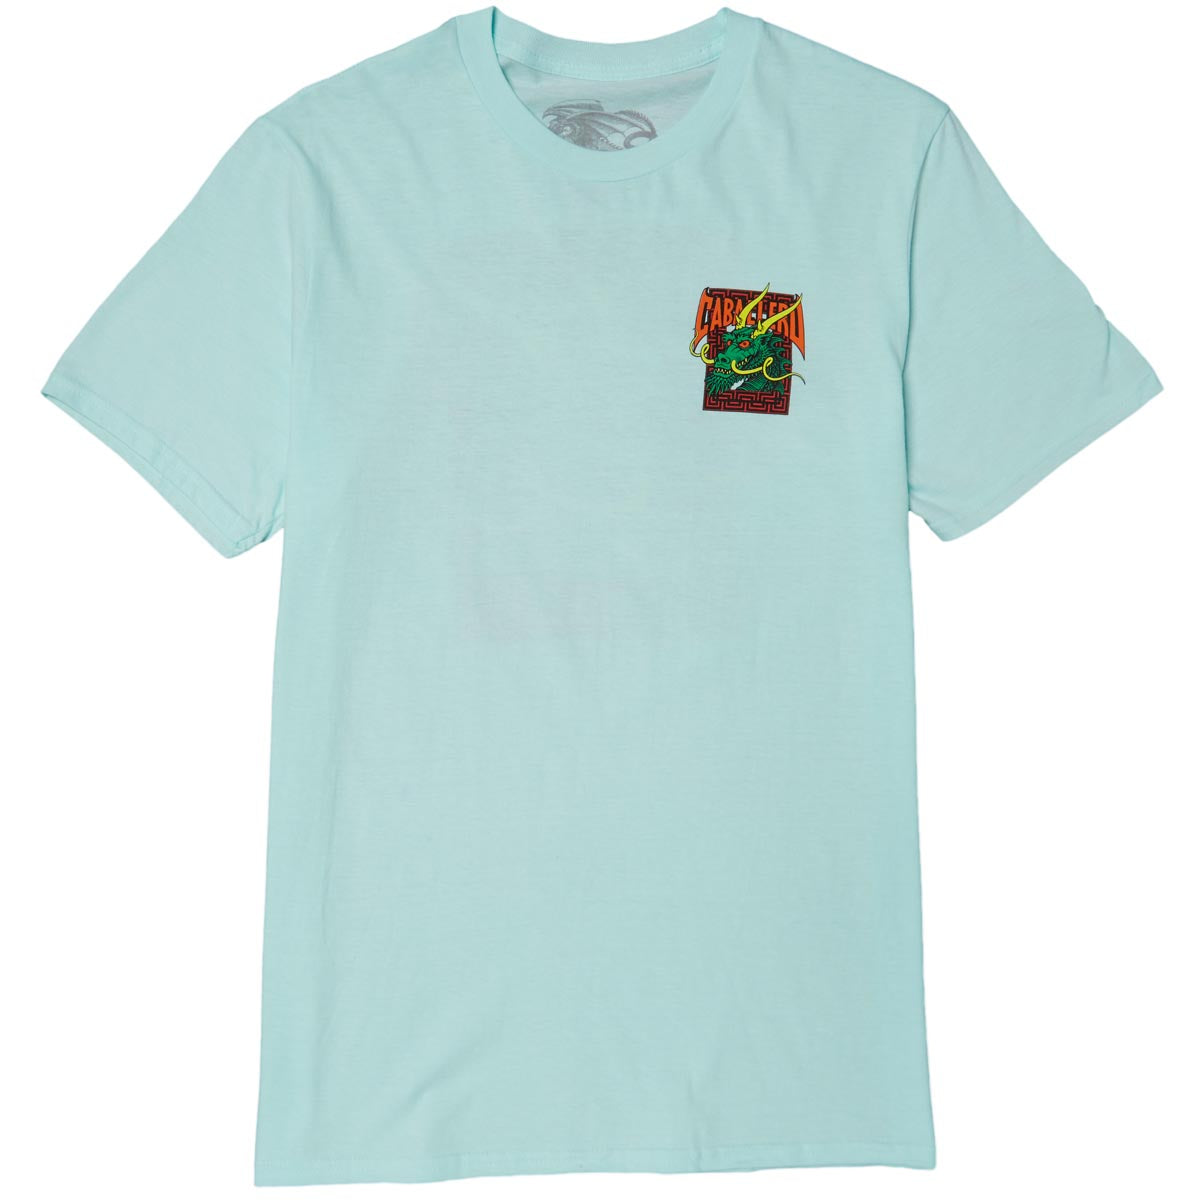 Powell-Peralta Steve Caballero Street Dragon T-Shirt - Teal Ice image 4